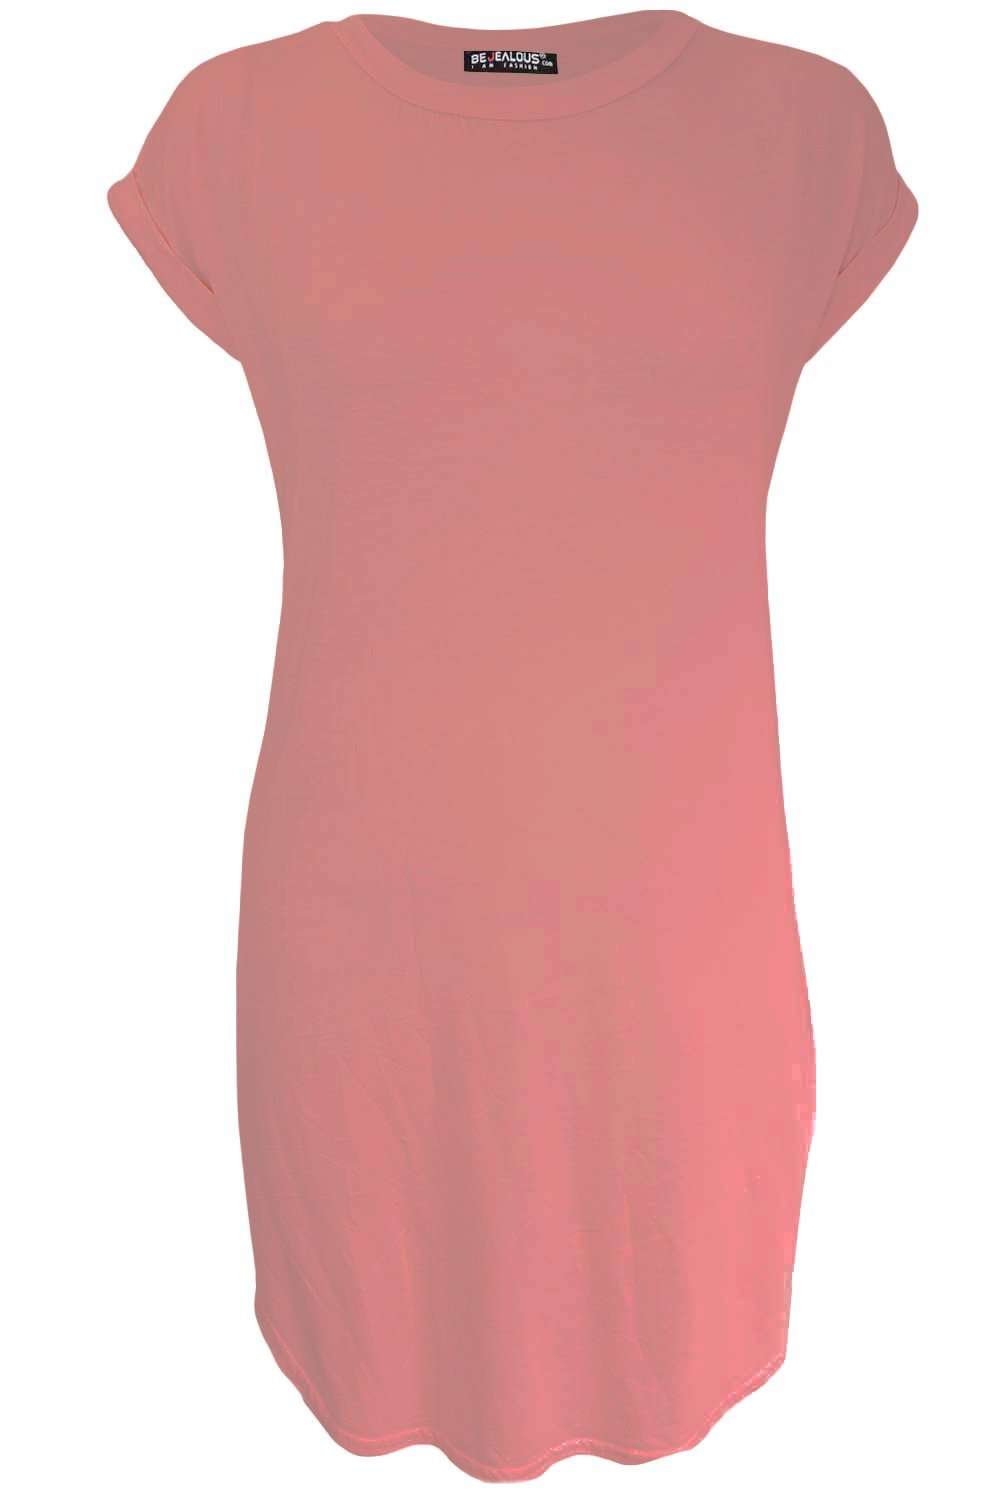 Janet Roll Sleeve Curved Hem Mini Tshirt Dress - bejealous-com